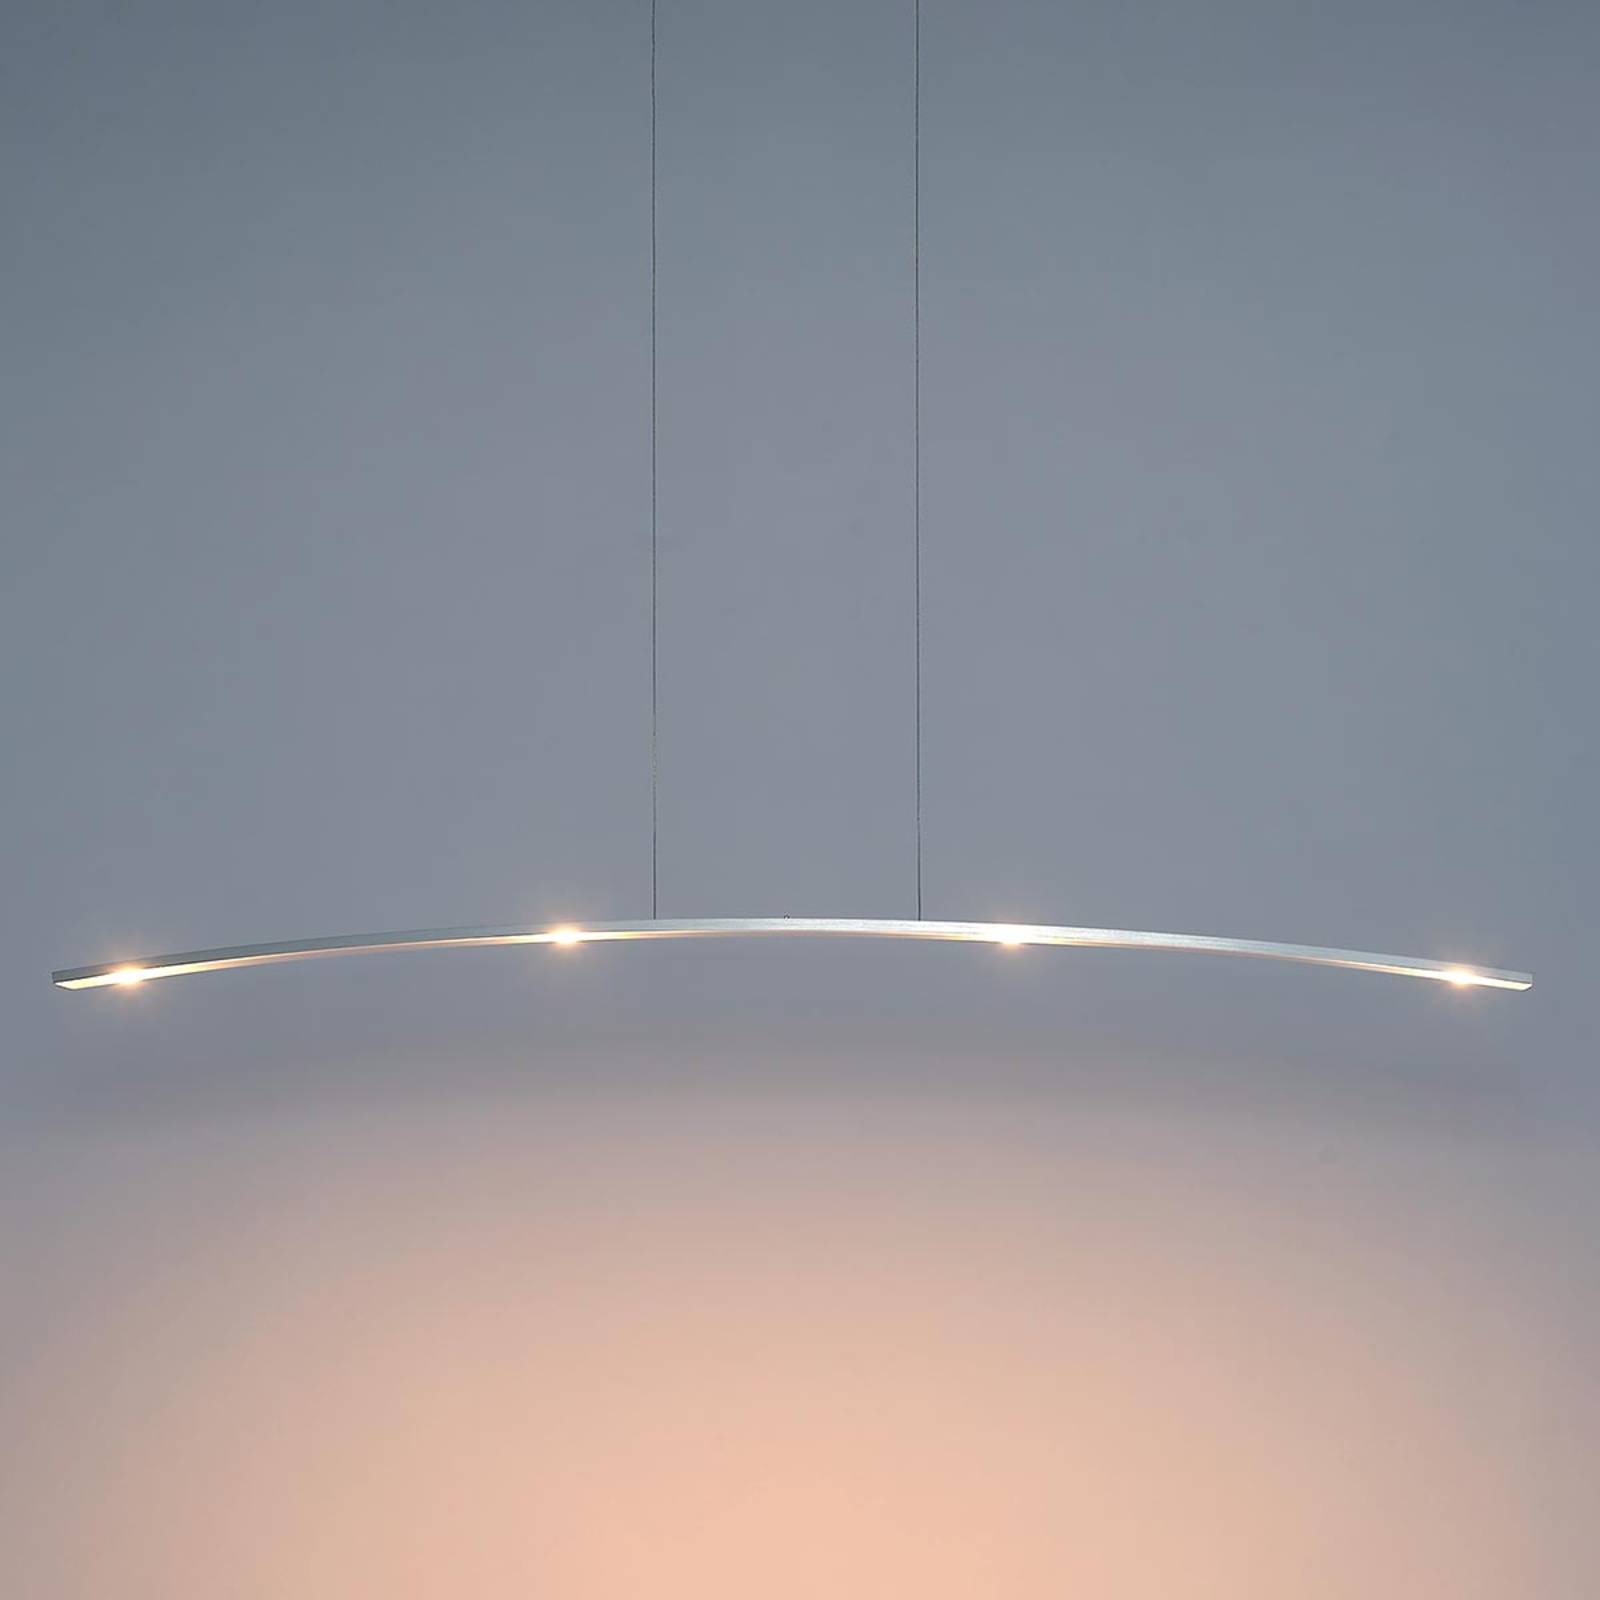 Lampa wisząca LED Cristalli, prostoliniowy design